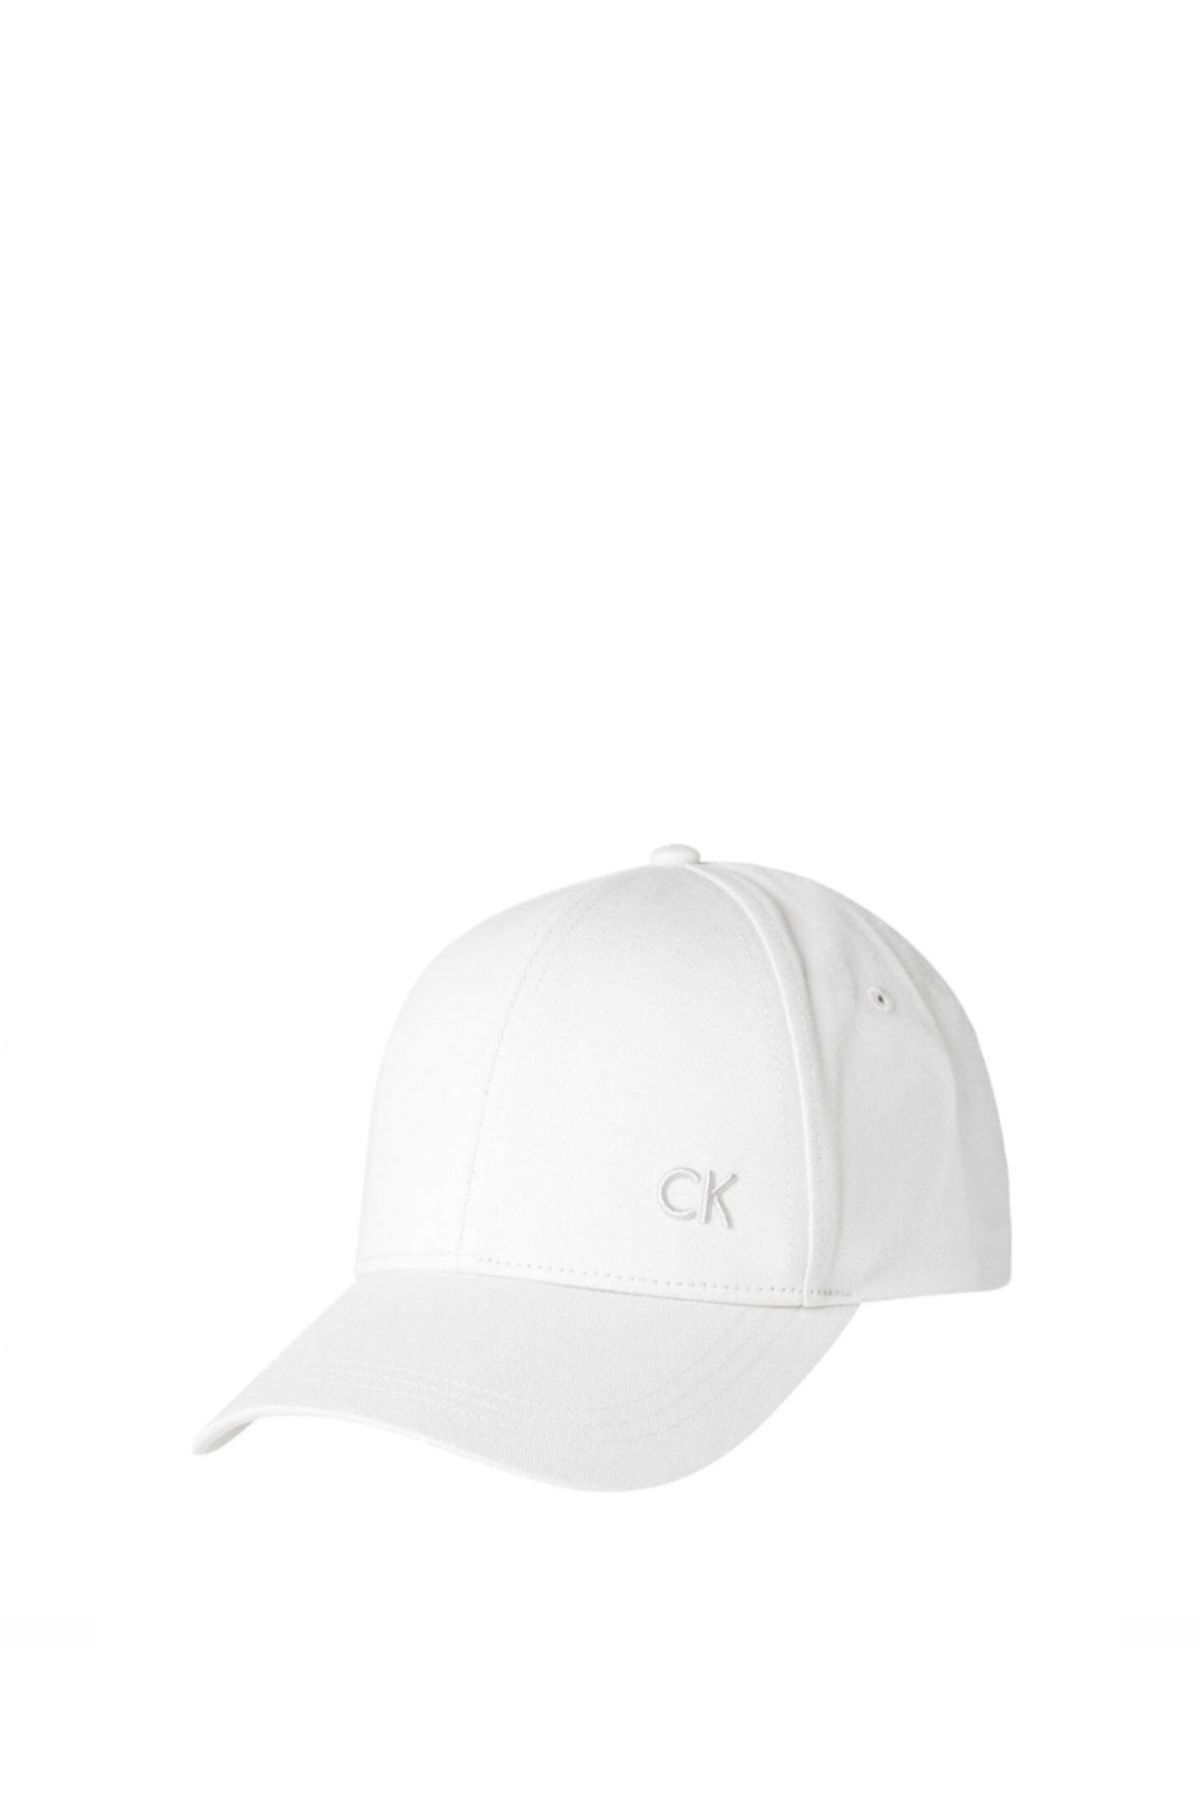 Calvin Klein Erkek Erkek Ck Baseball Cap - Şapka K50k502533